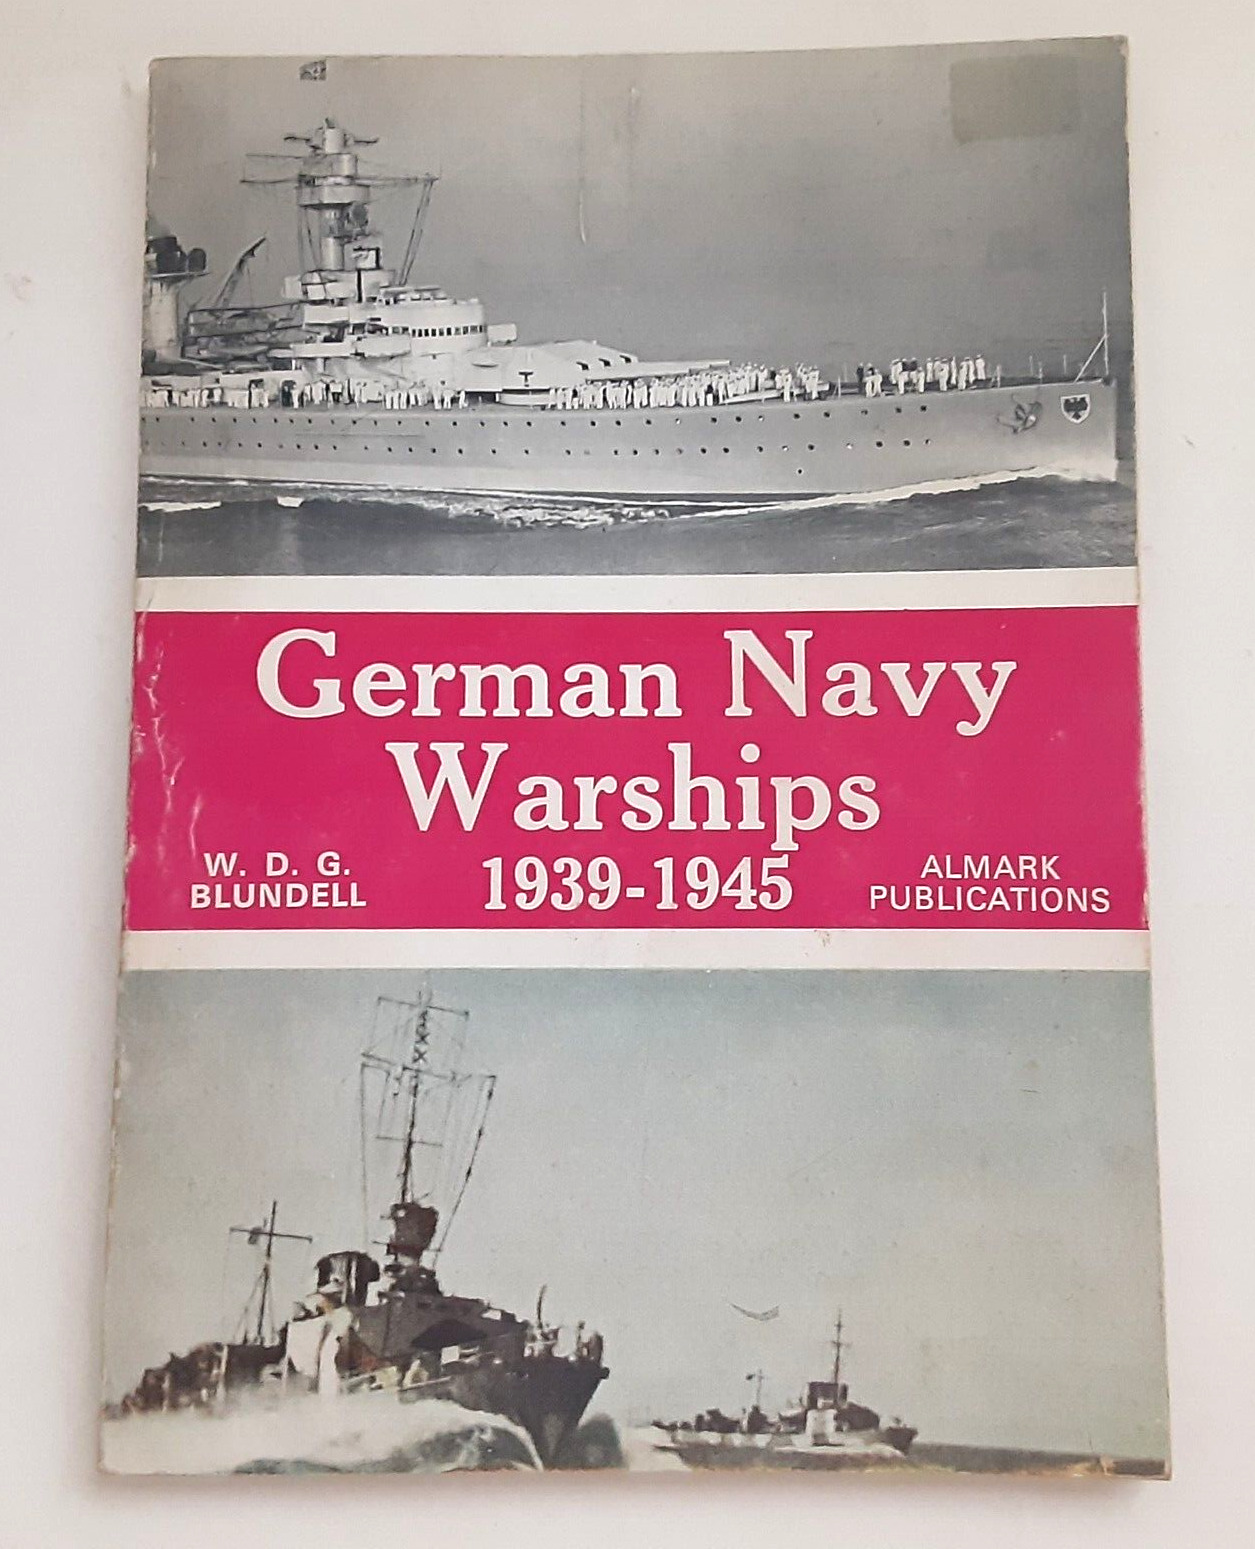 1972 German Navy Warships 1939-1945 WW2 Almark Publications London England B & W